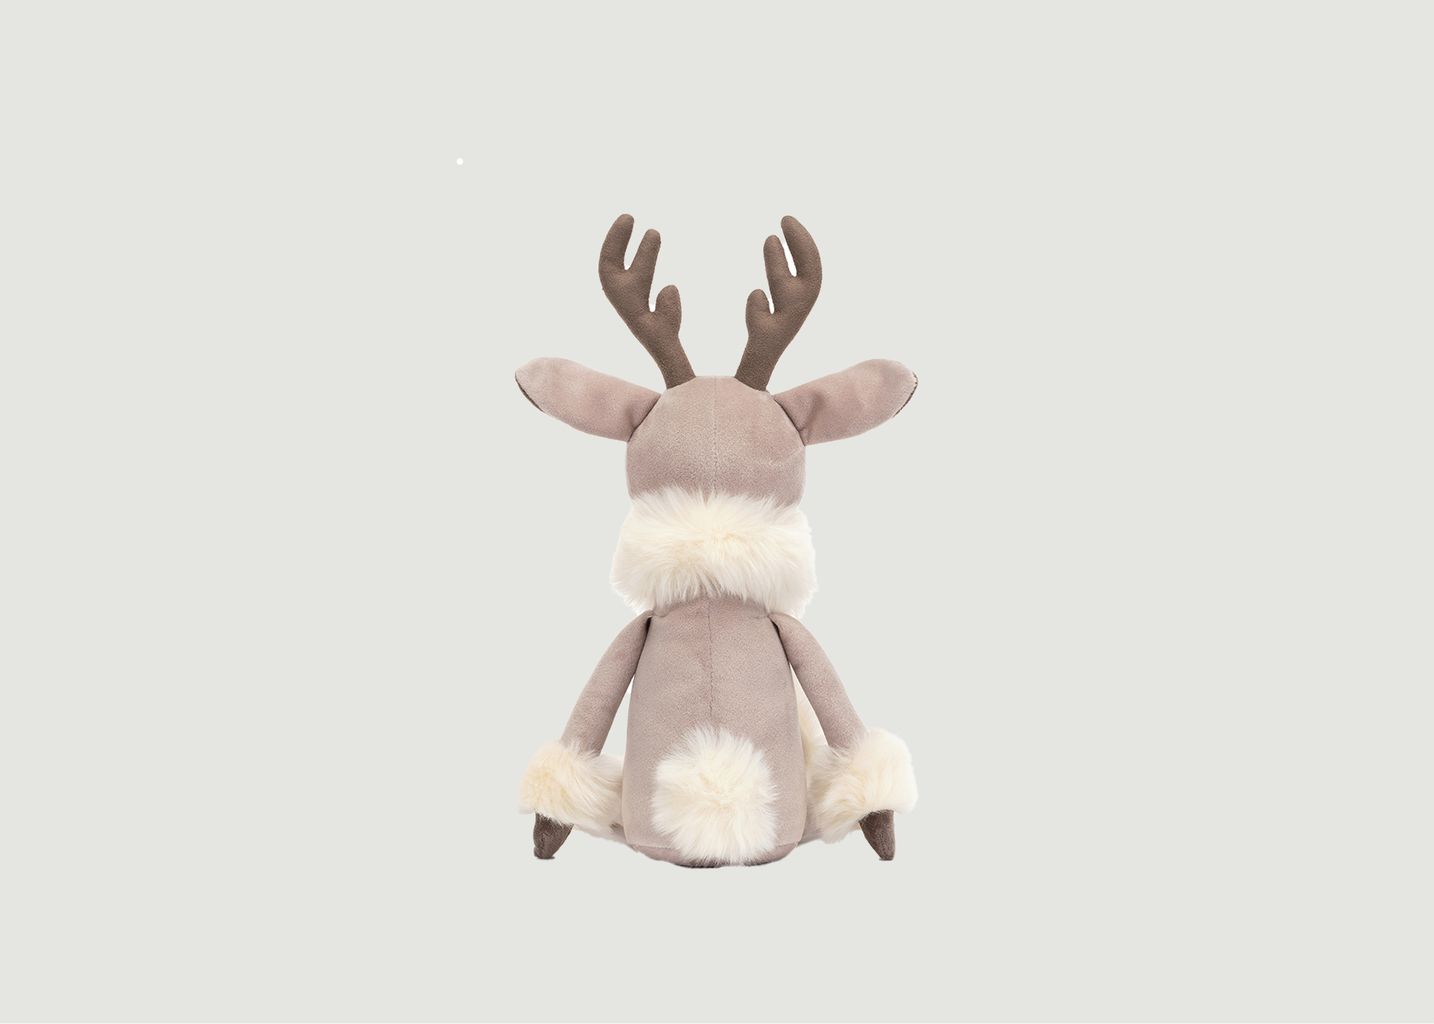 Joy the Reindeer Plush  - Jellycat